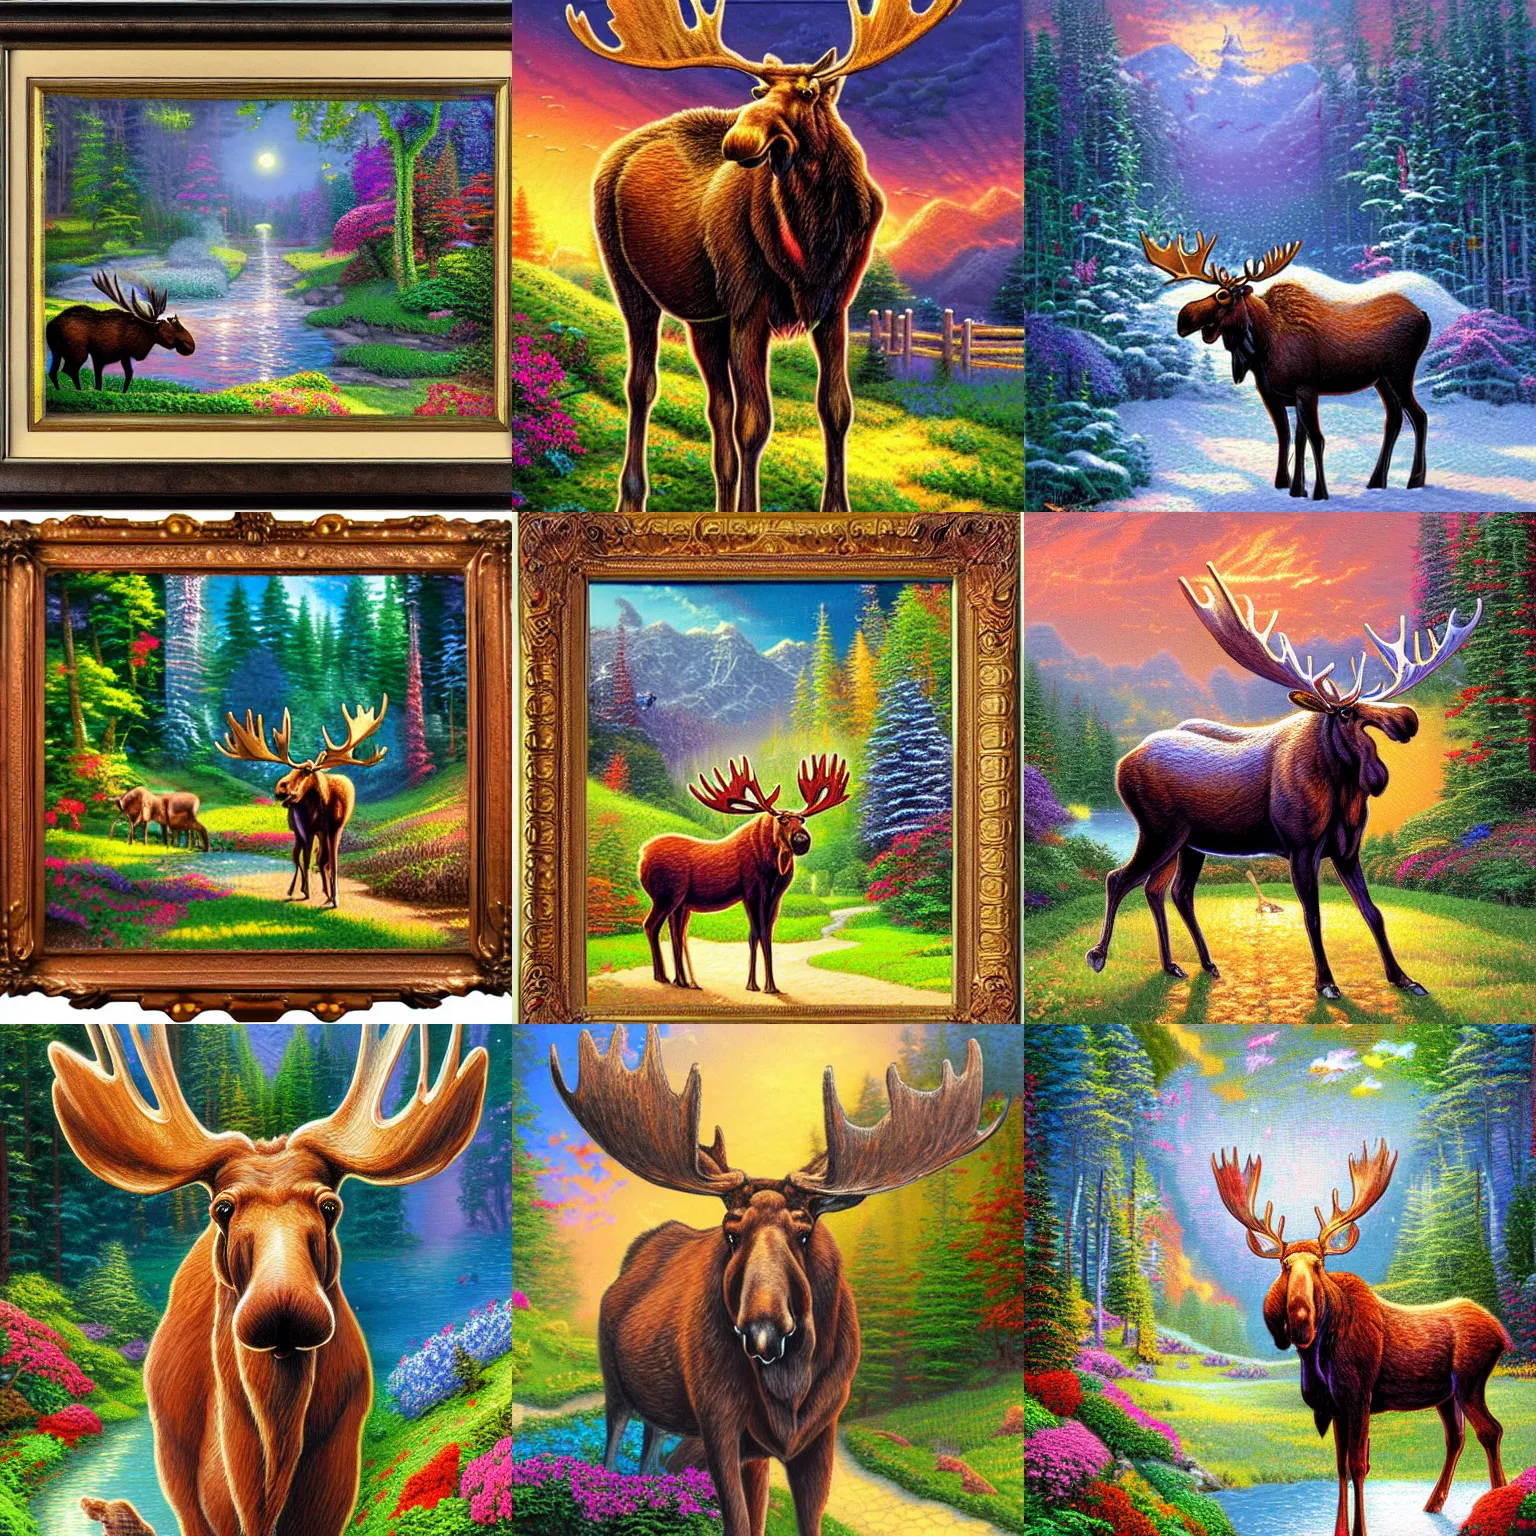 Prompt: moose, illustration by thomas kinkade, colorful, creative design